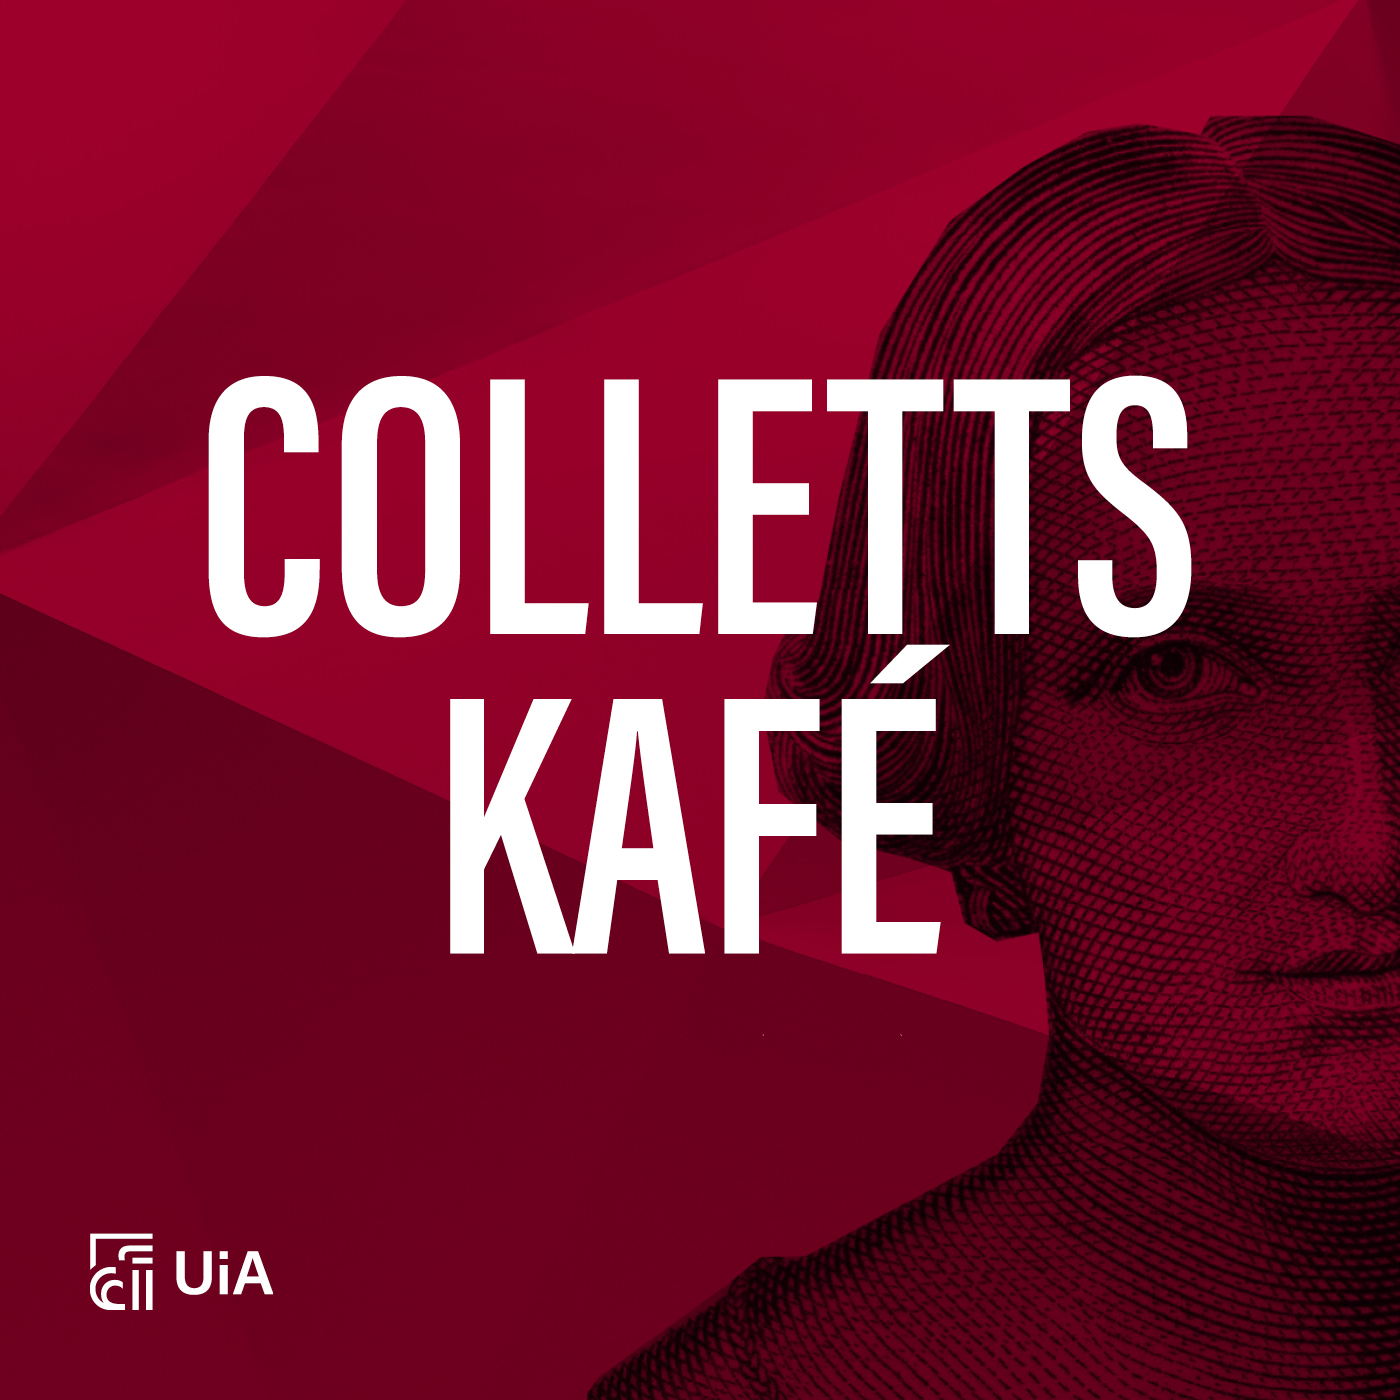 Artwork for podcast Colletts kafé